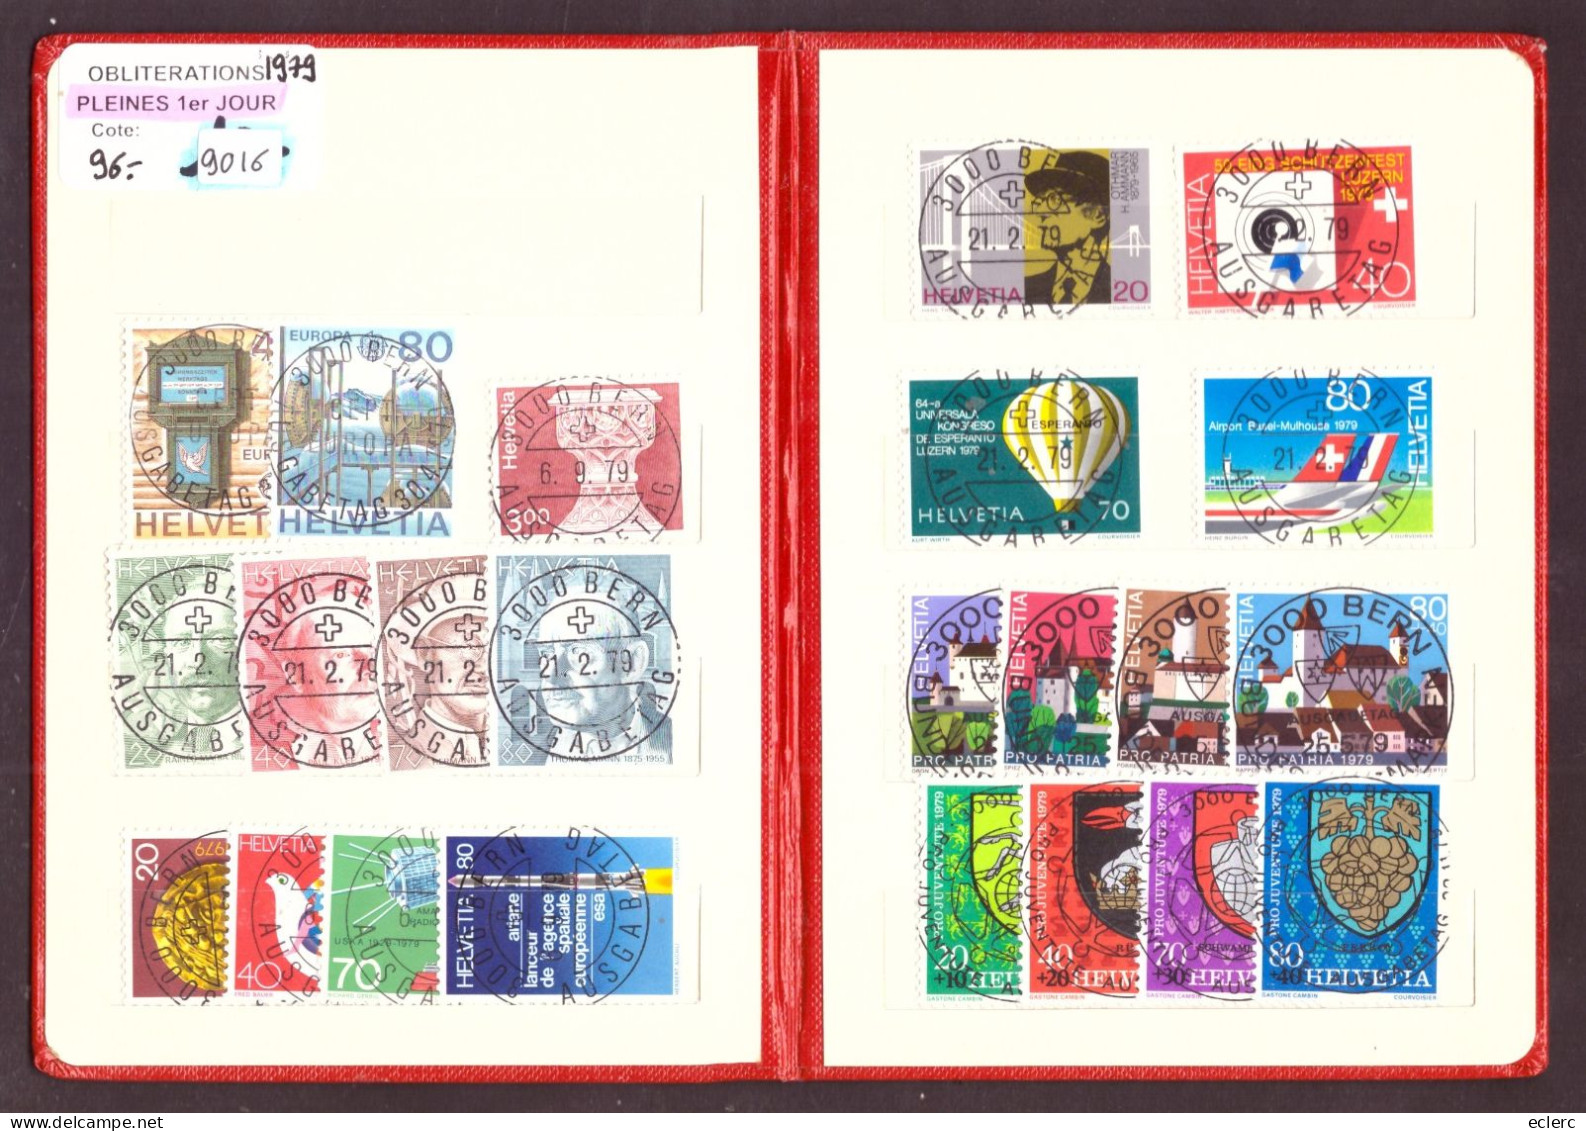 ANNEE COMPLETE 1979 - OBLITERATIONS PLEINES 1er JOUR - ERSTTAG VOLL STEMPELN - COTE: 96.- - Used Stamps